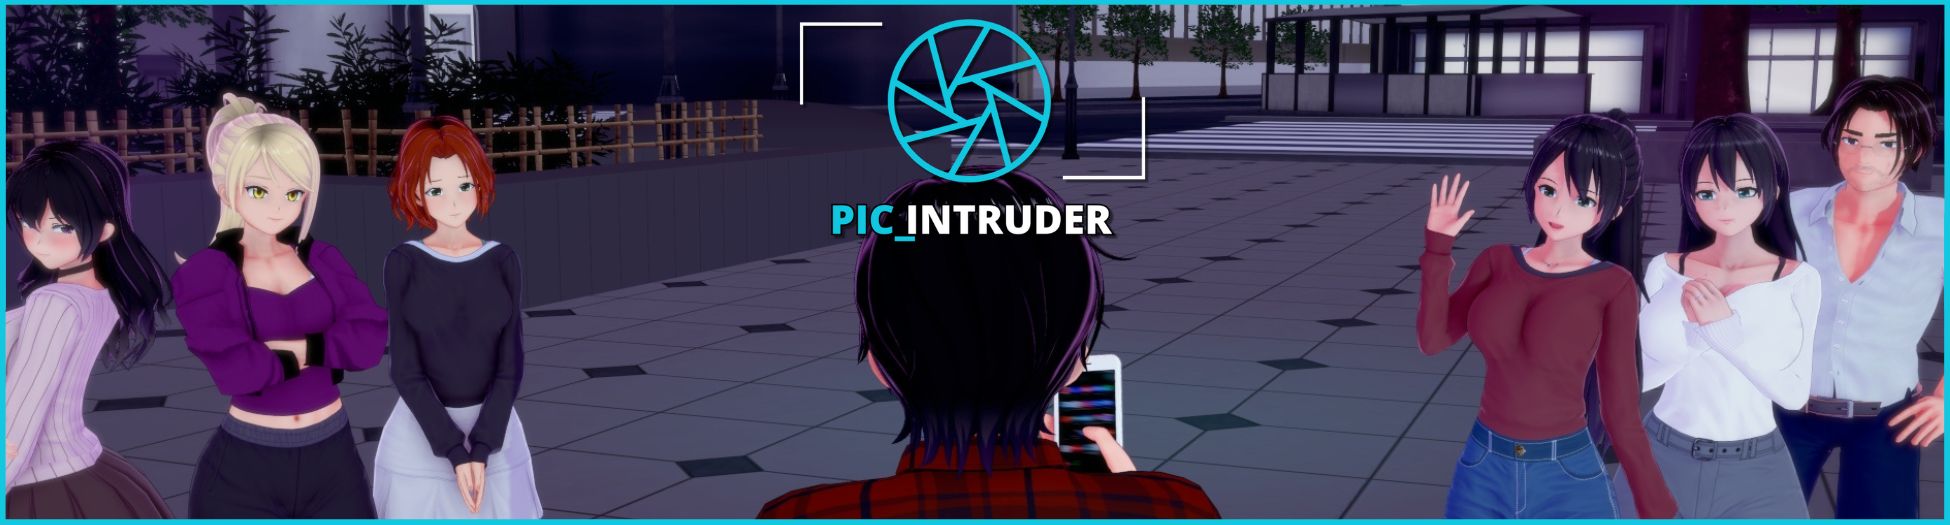 pic_intruder_banner.jpg